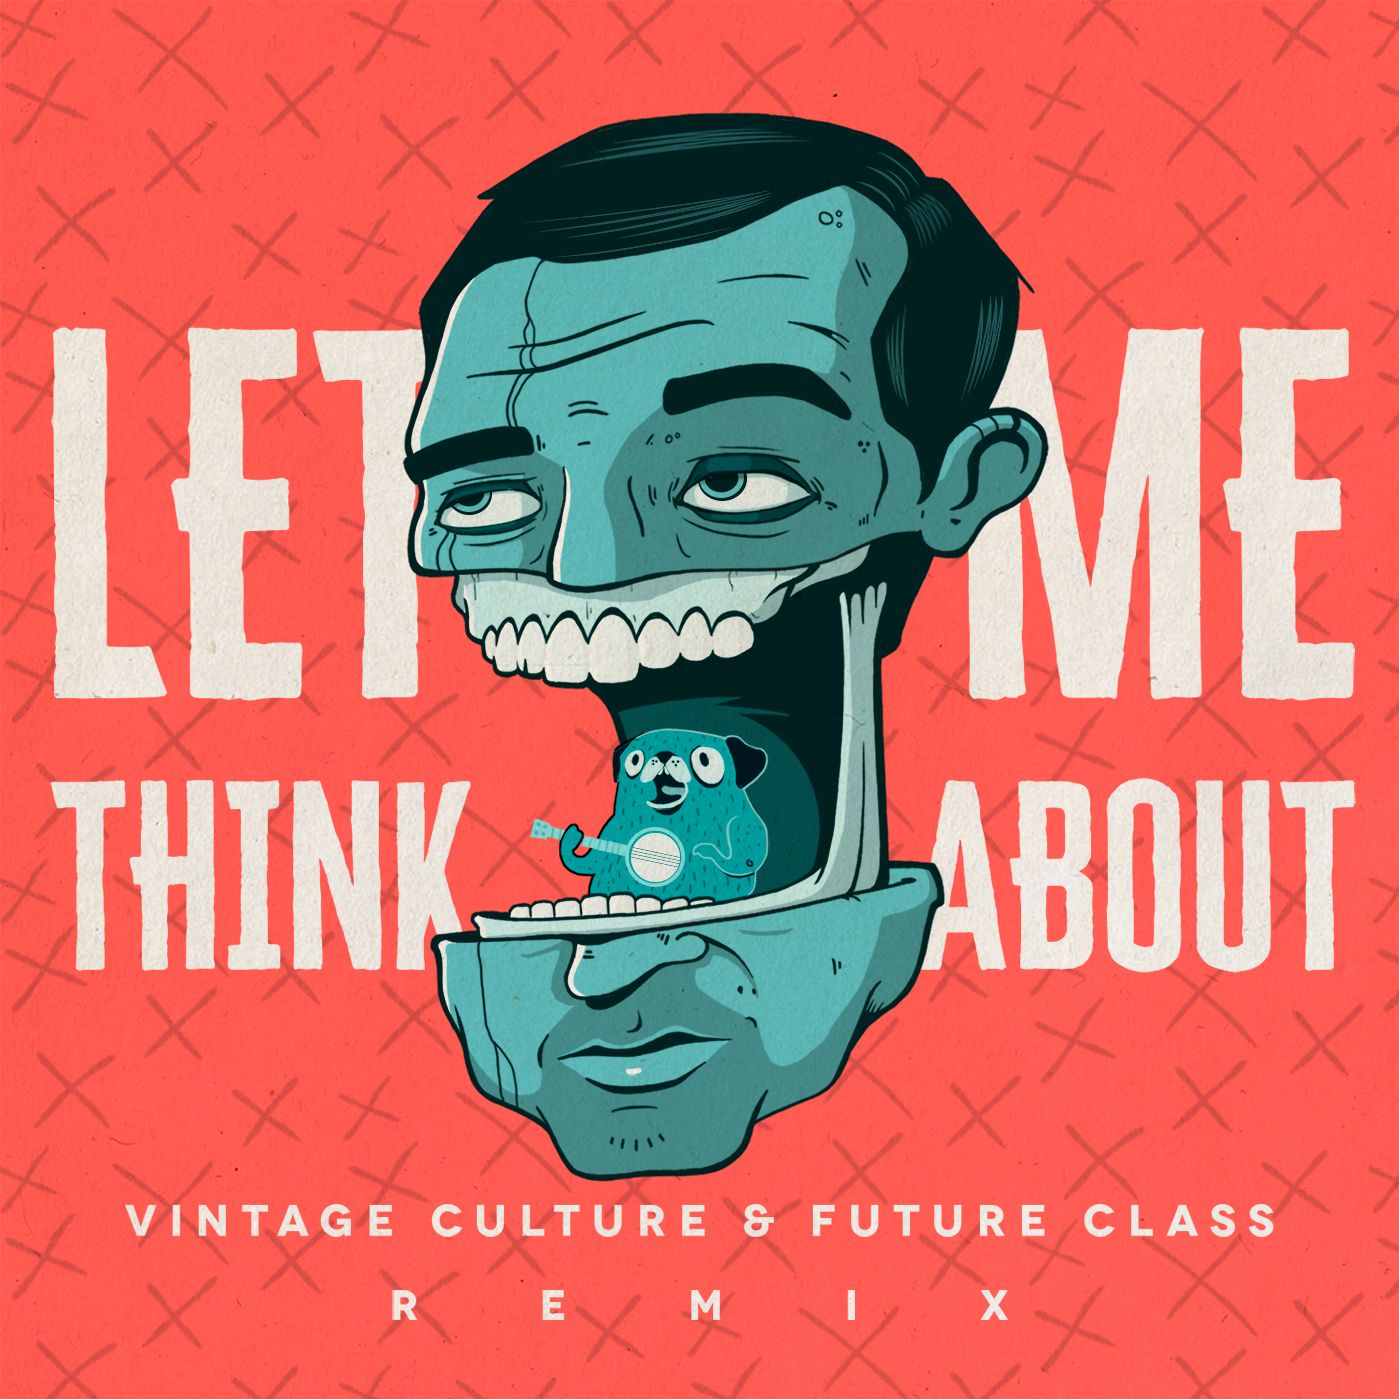 Download Vintage Culture & Future Class - Let Me Think About